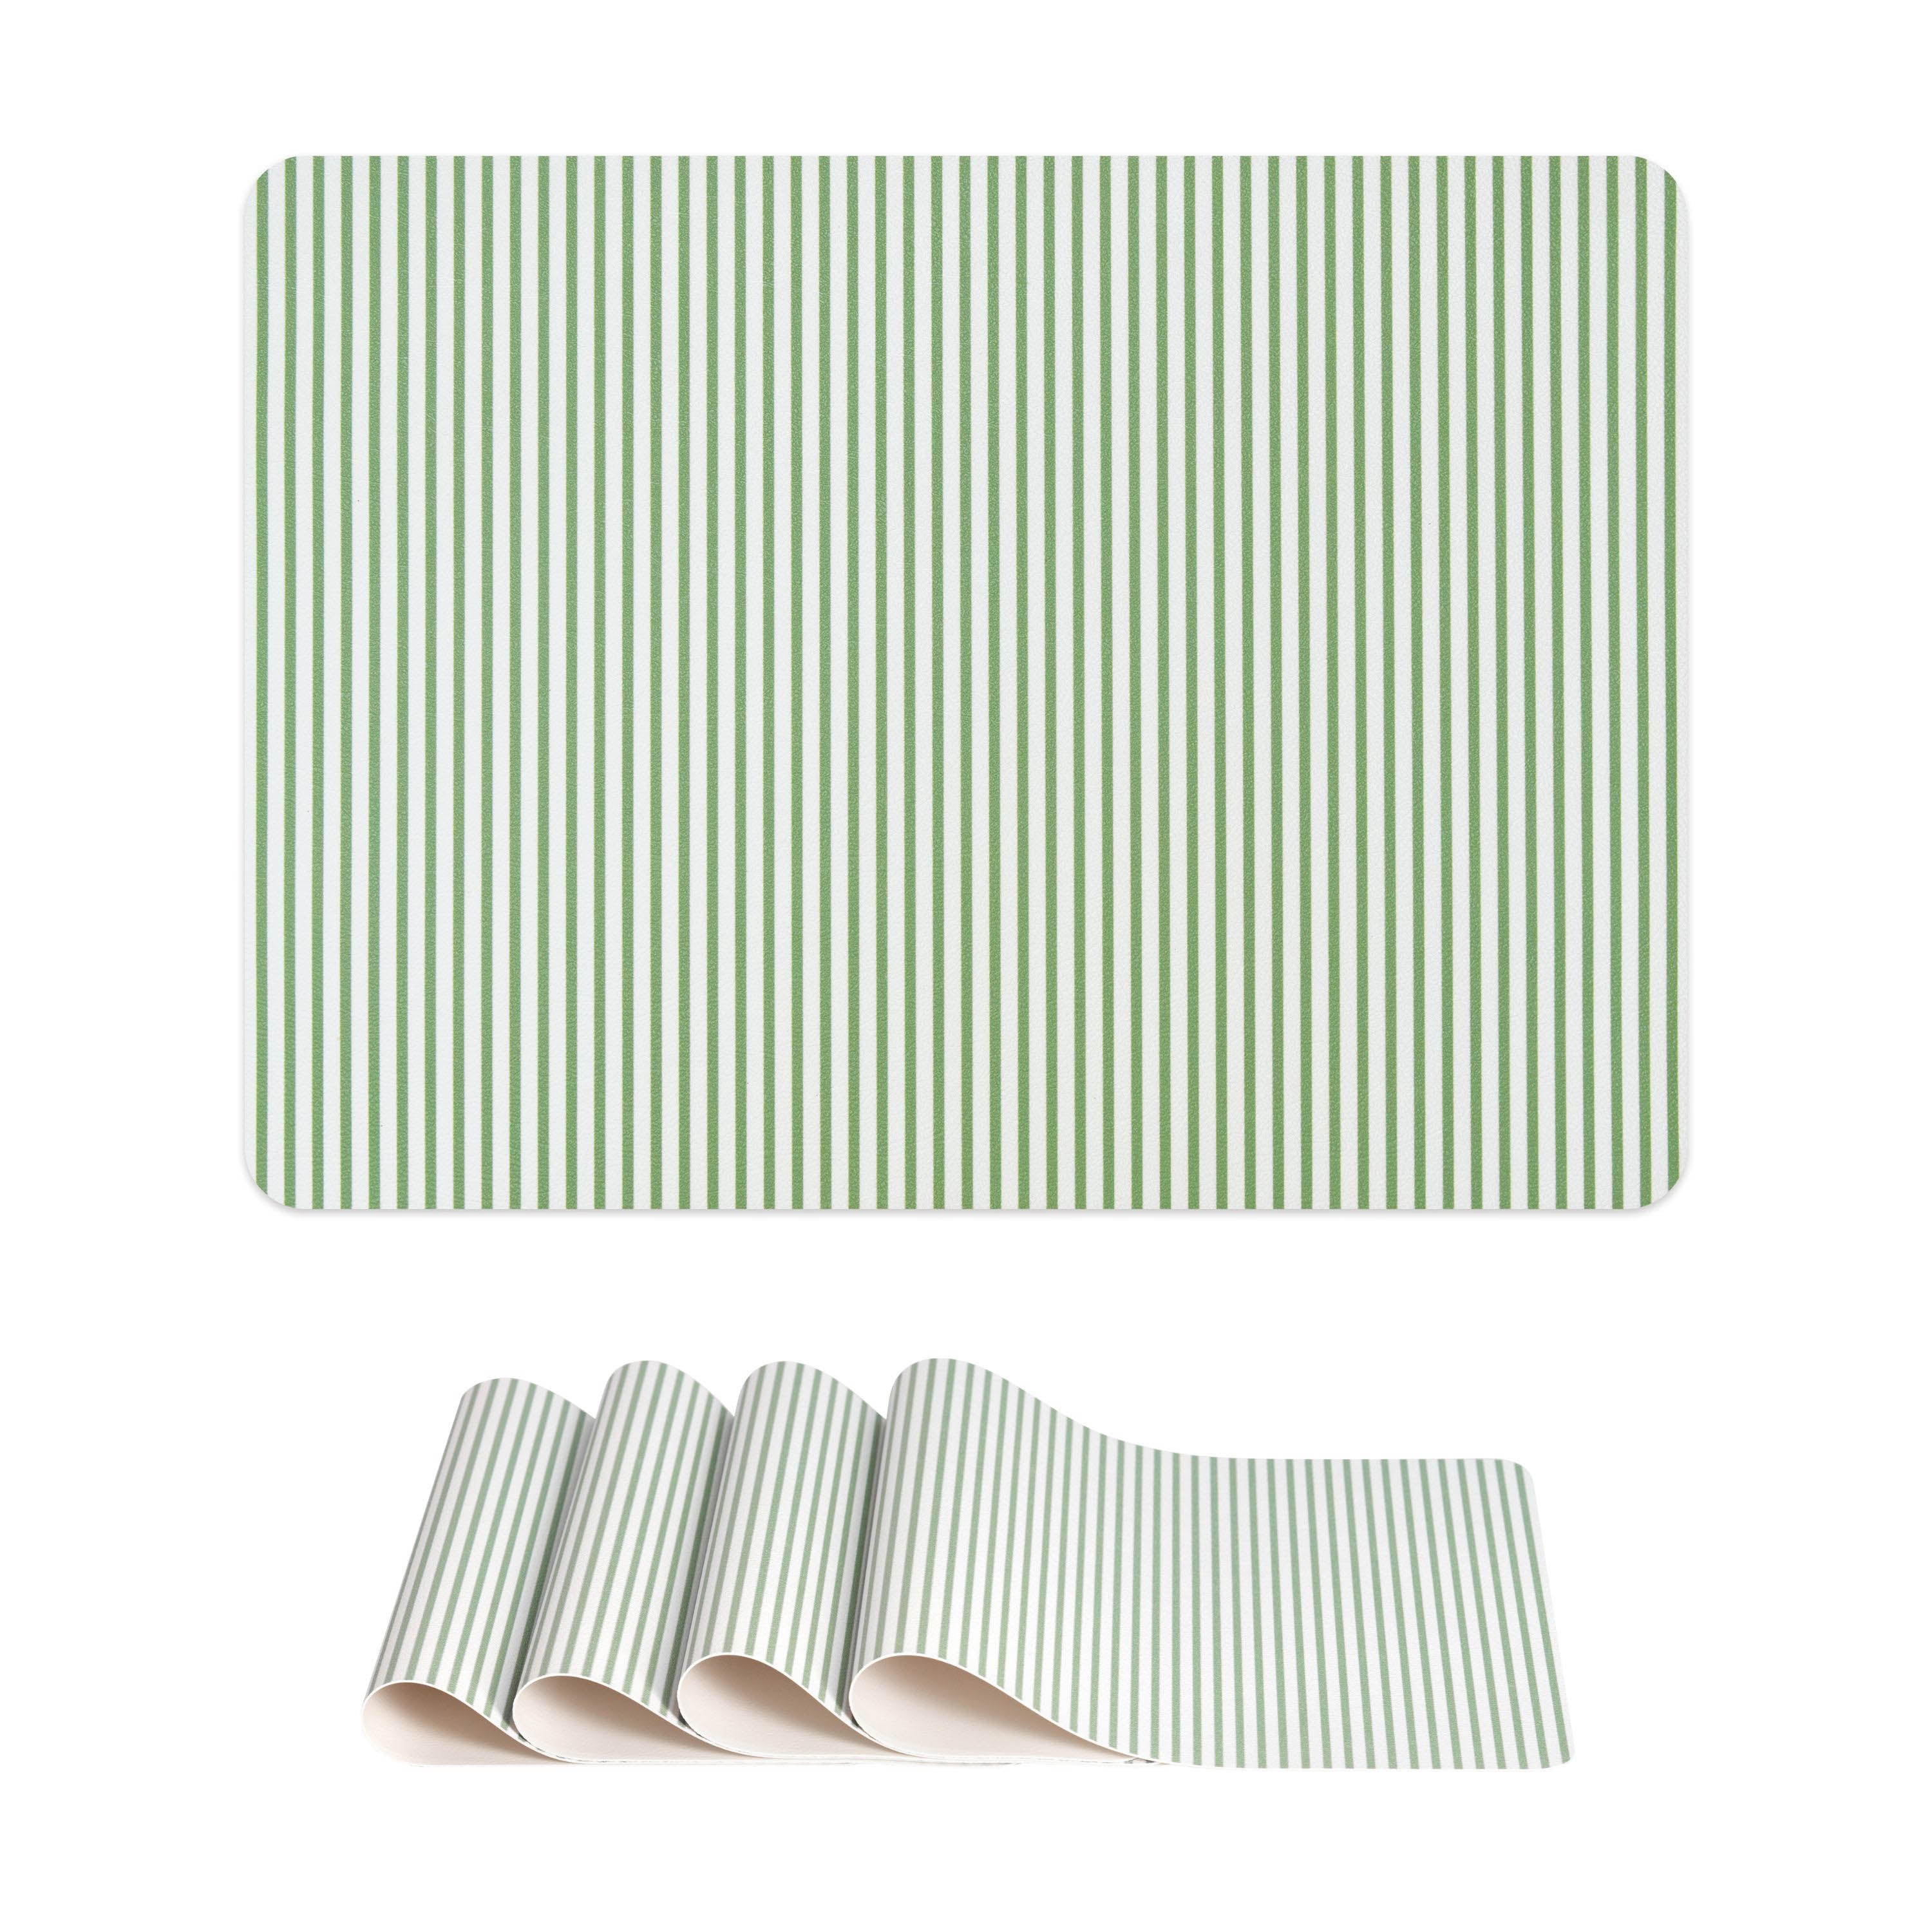 Coastal Vegan Leather Placemat, Stripe, Green, 14"x19"